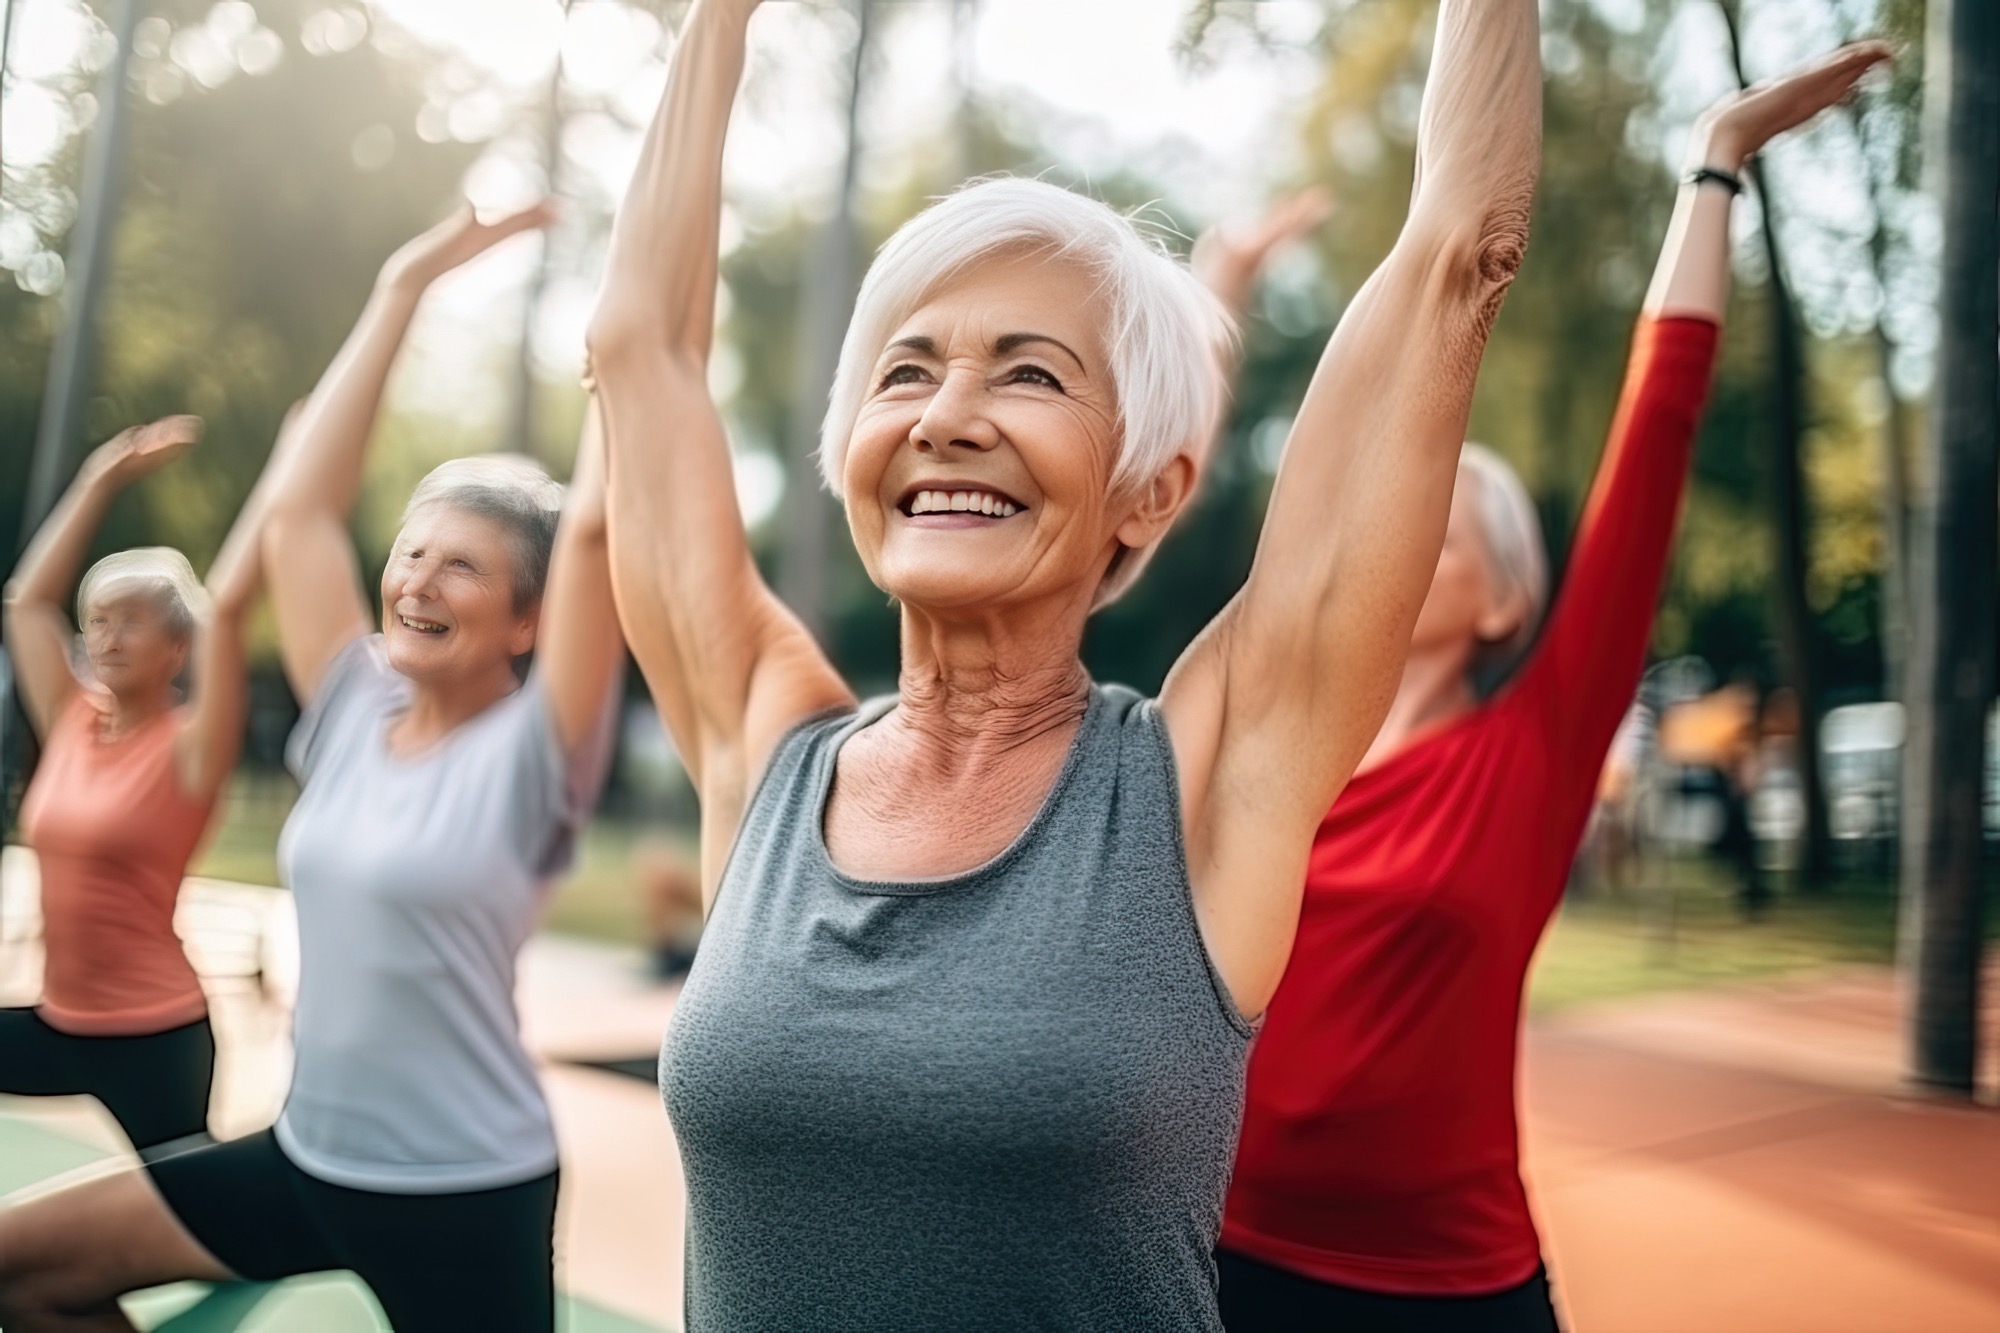 How do I Start With Exercises For The Elderly And Seniors?